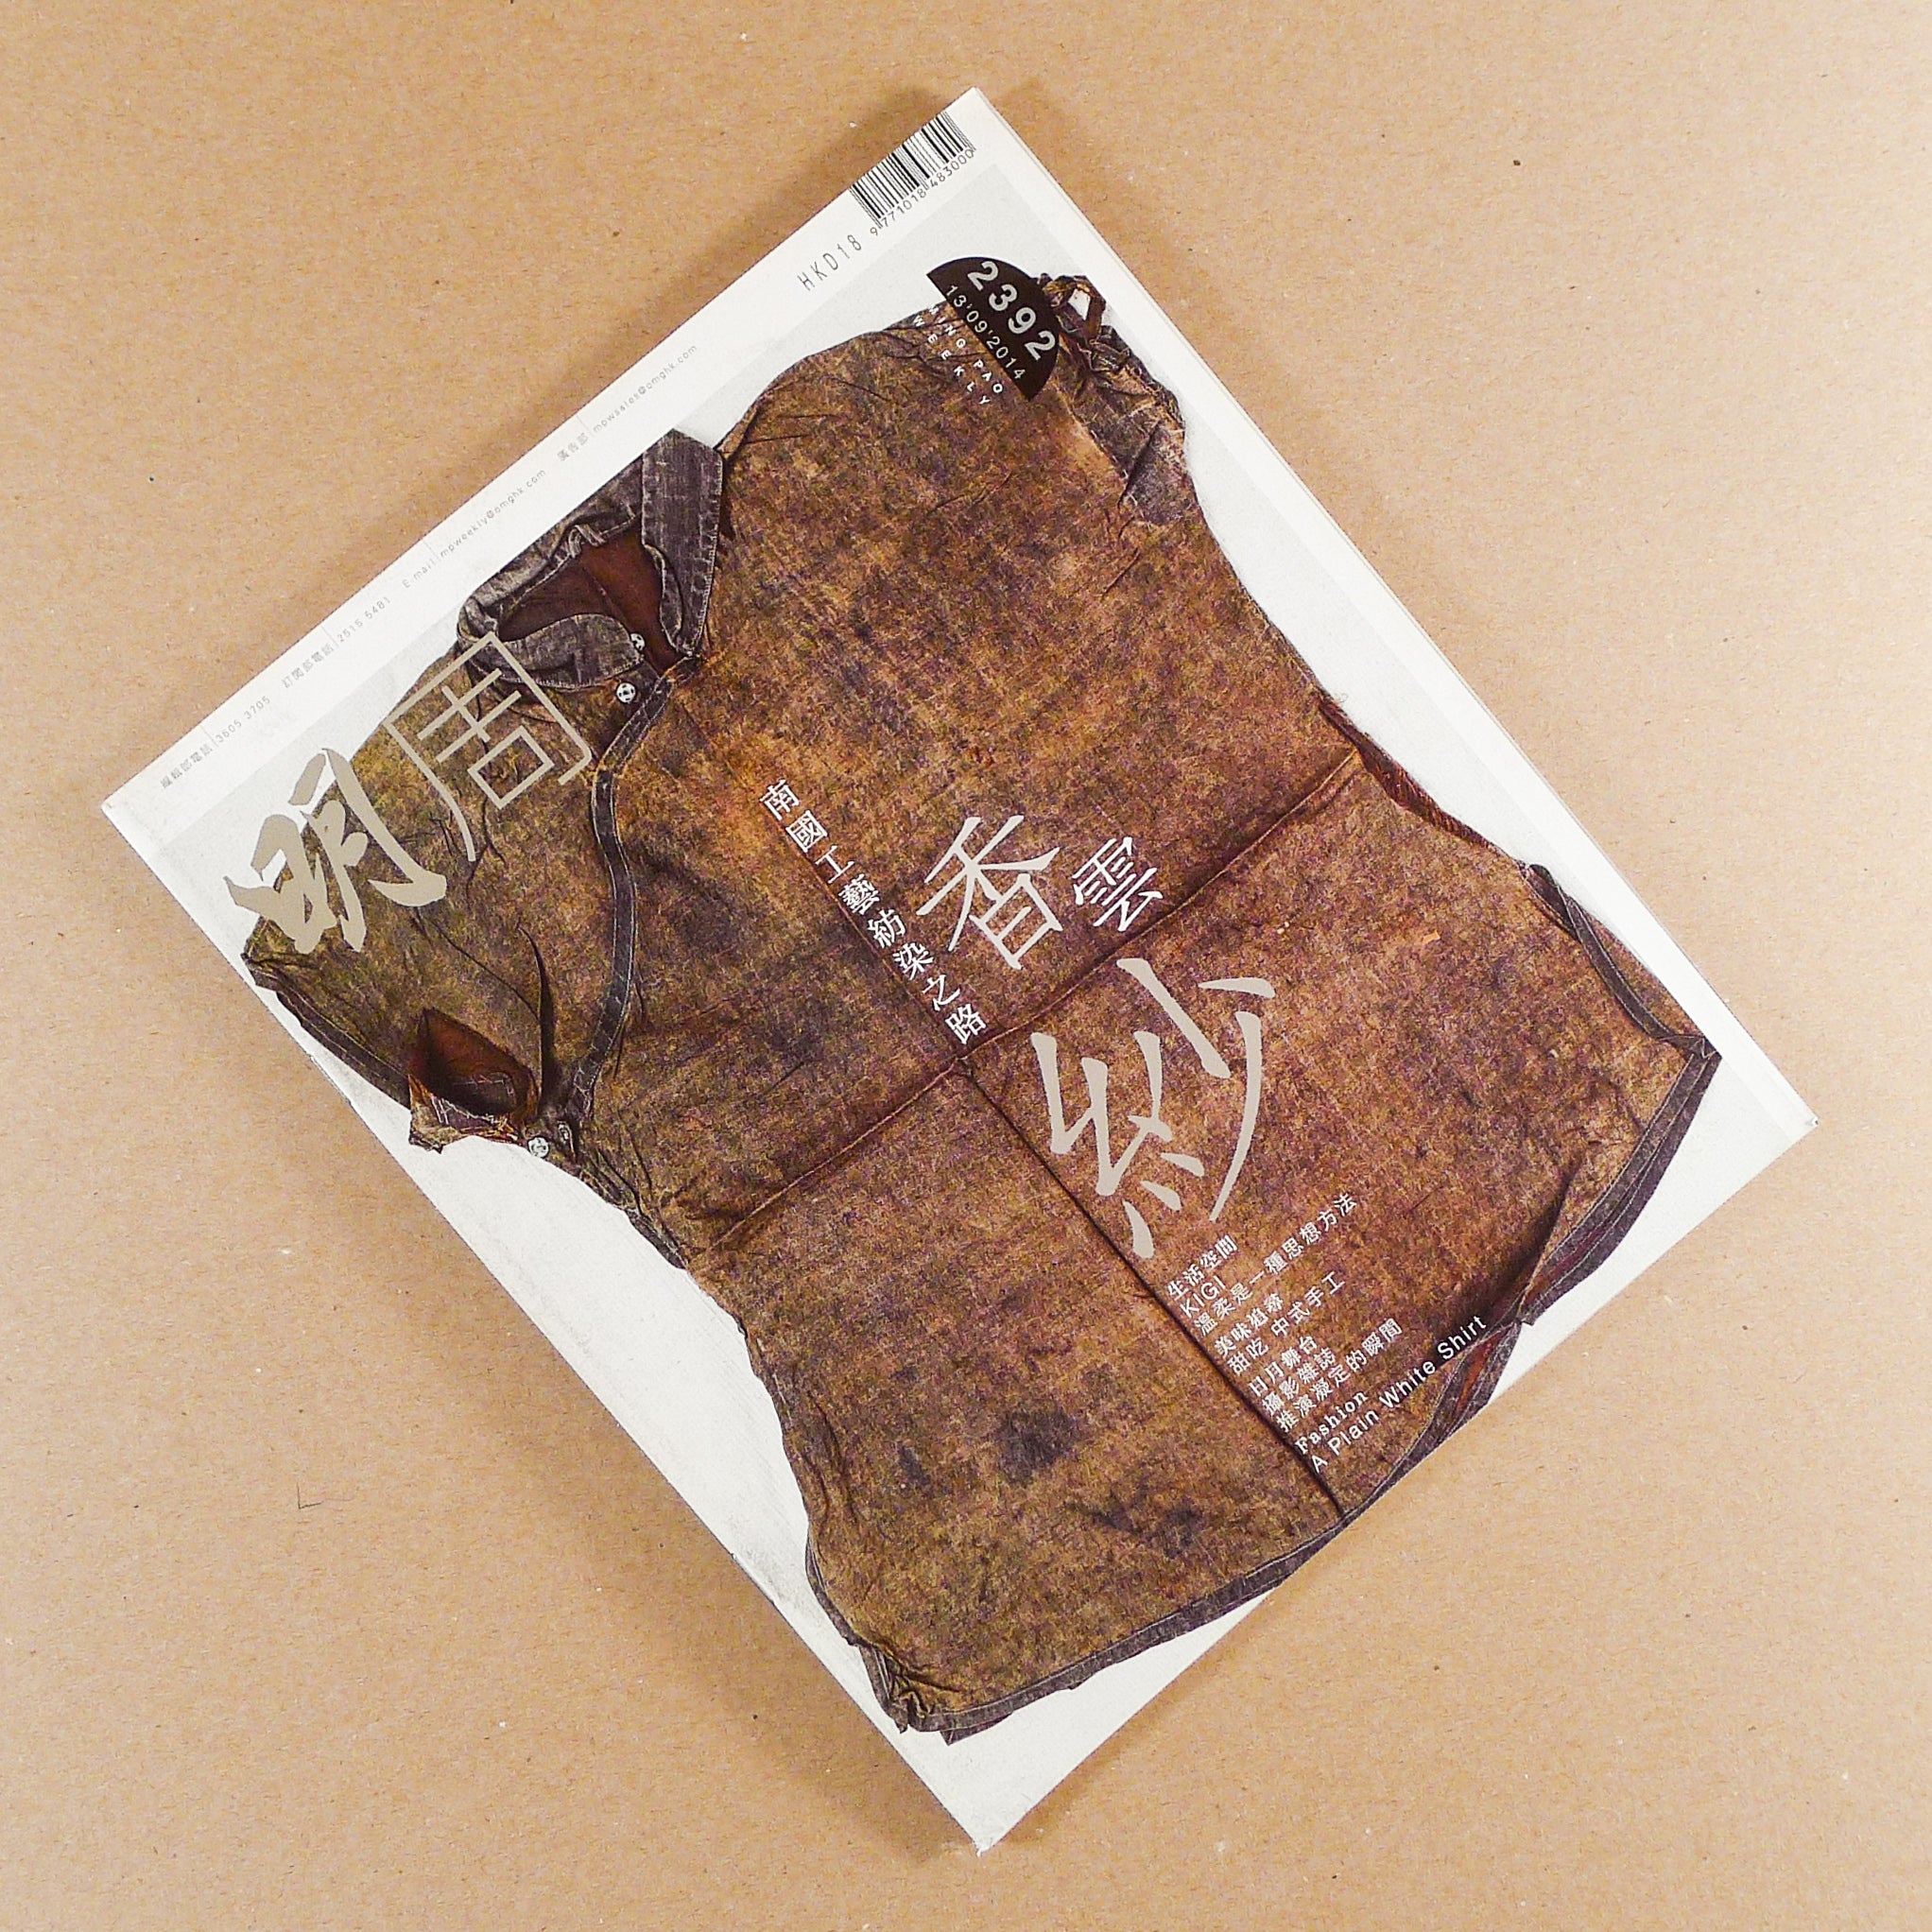 Ming Pao Weekly Magazine + Mud Silk Sample Set (CN)